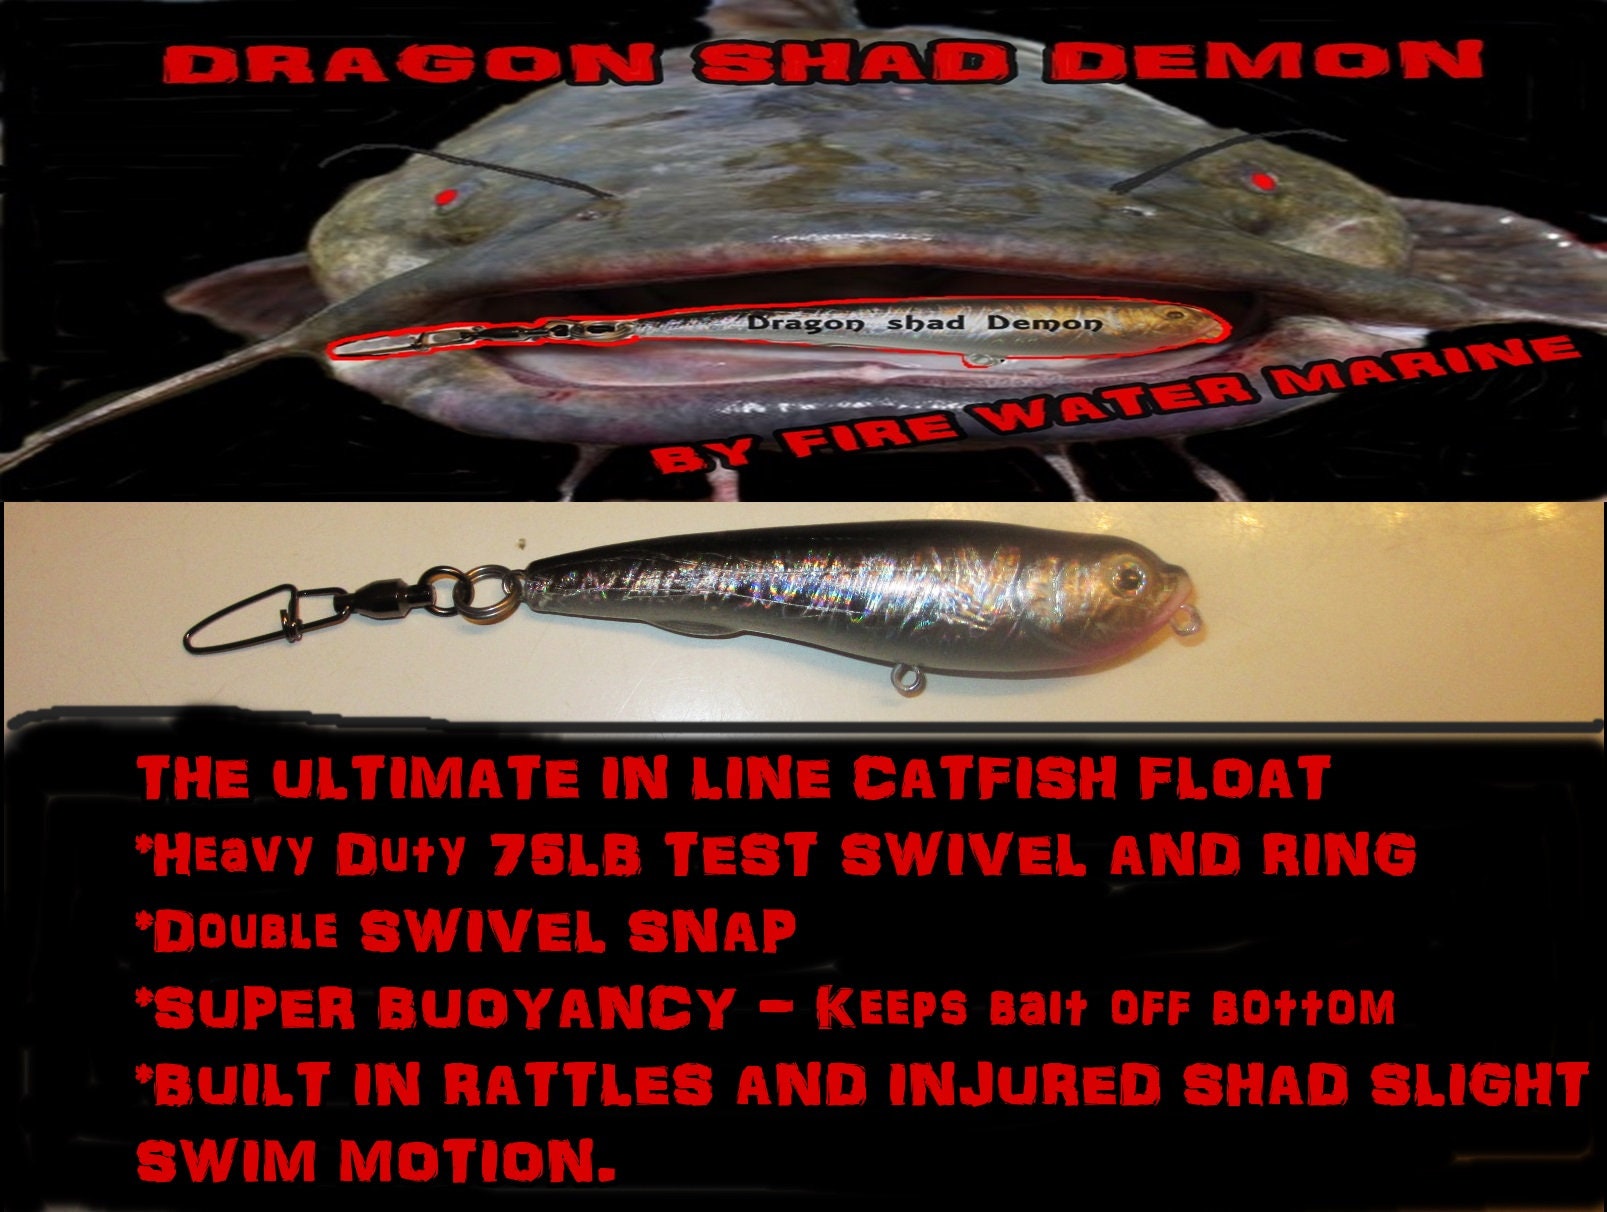  Catfish rig,Demon Dragon Catfish Floats,Santee Cooper  Dragging Rattler Rig,Chunky Catfishing Rigs For Lake River Bank